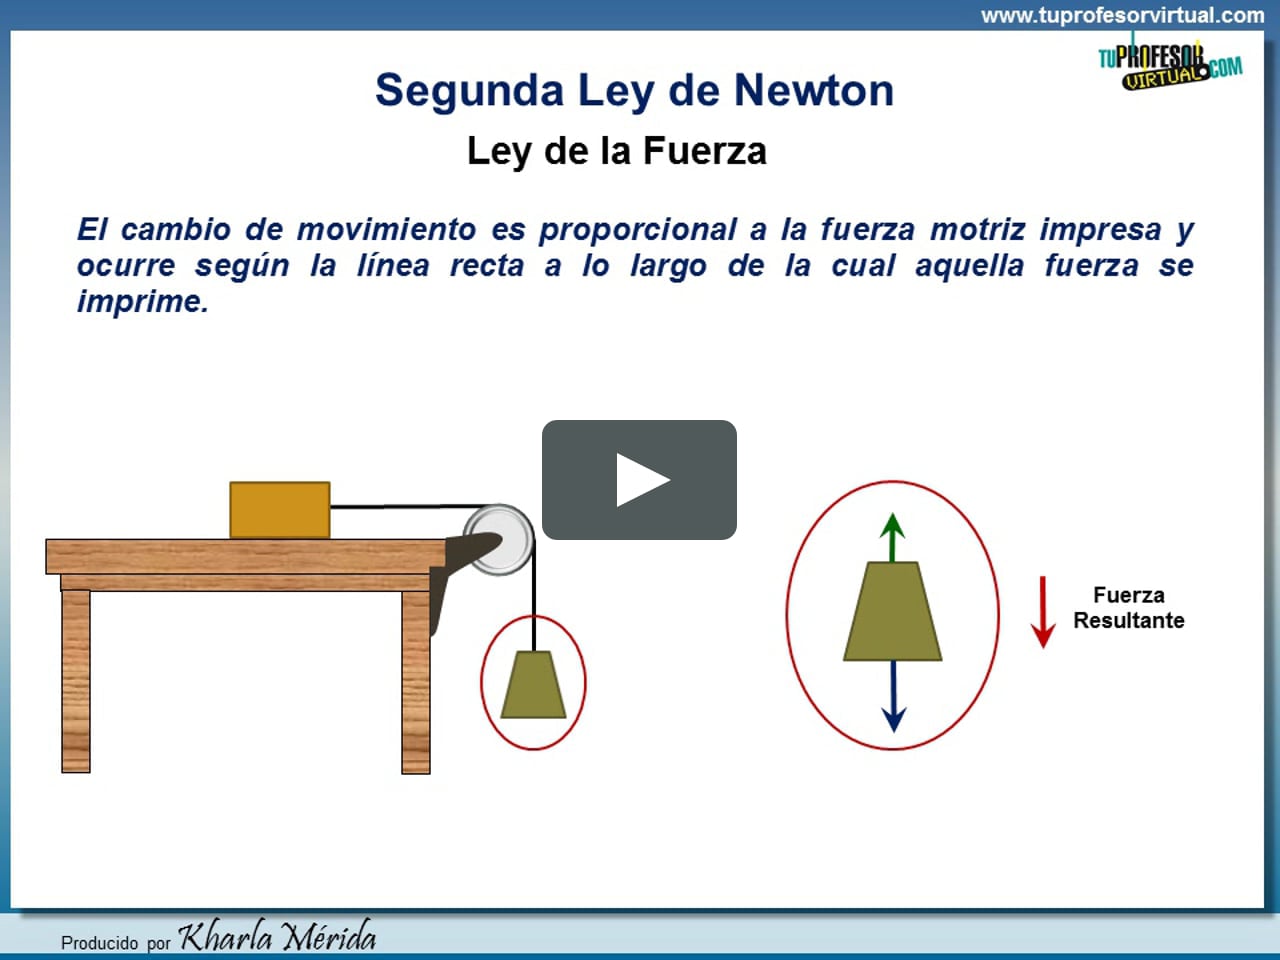 LEYES DE NEWTON. Segunda Ley de Newton on Vimeo